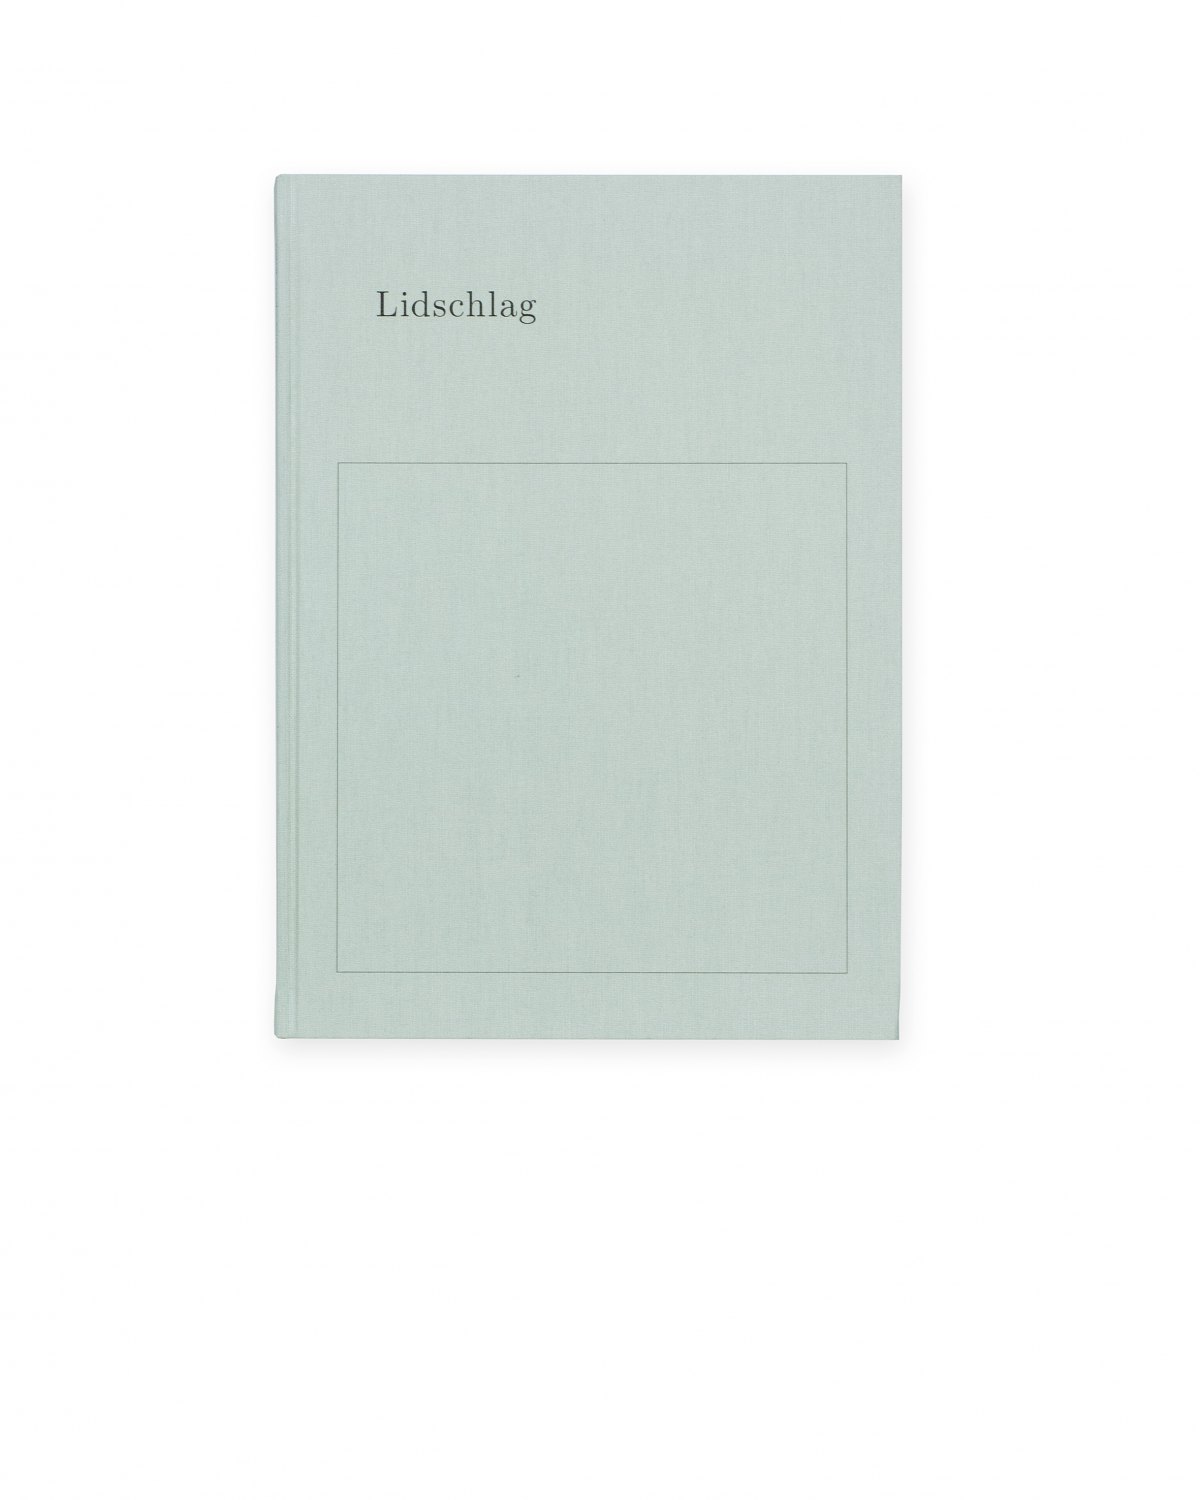 Kitty Kraus, Lidschlag  Catalogue, Kestner Gesellschaft, Hannover 2013/14, 64 p.  ISBN 978-3-86984-498-5